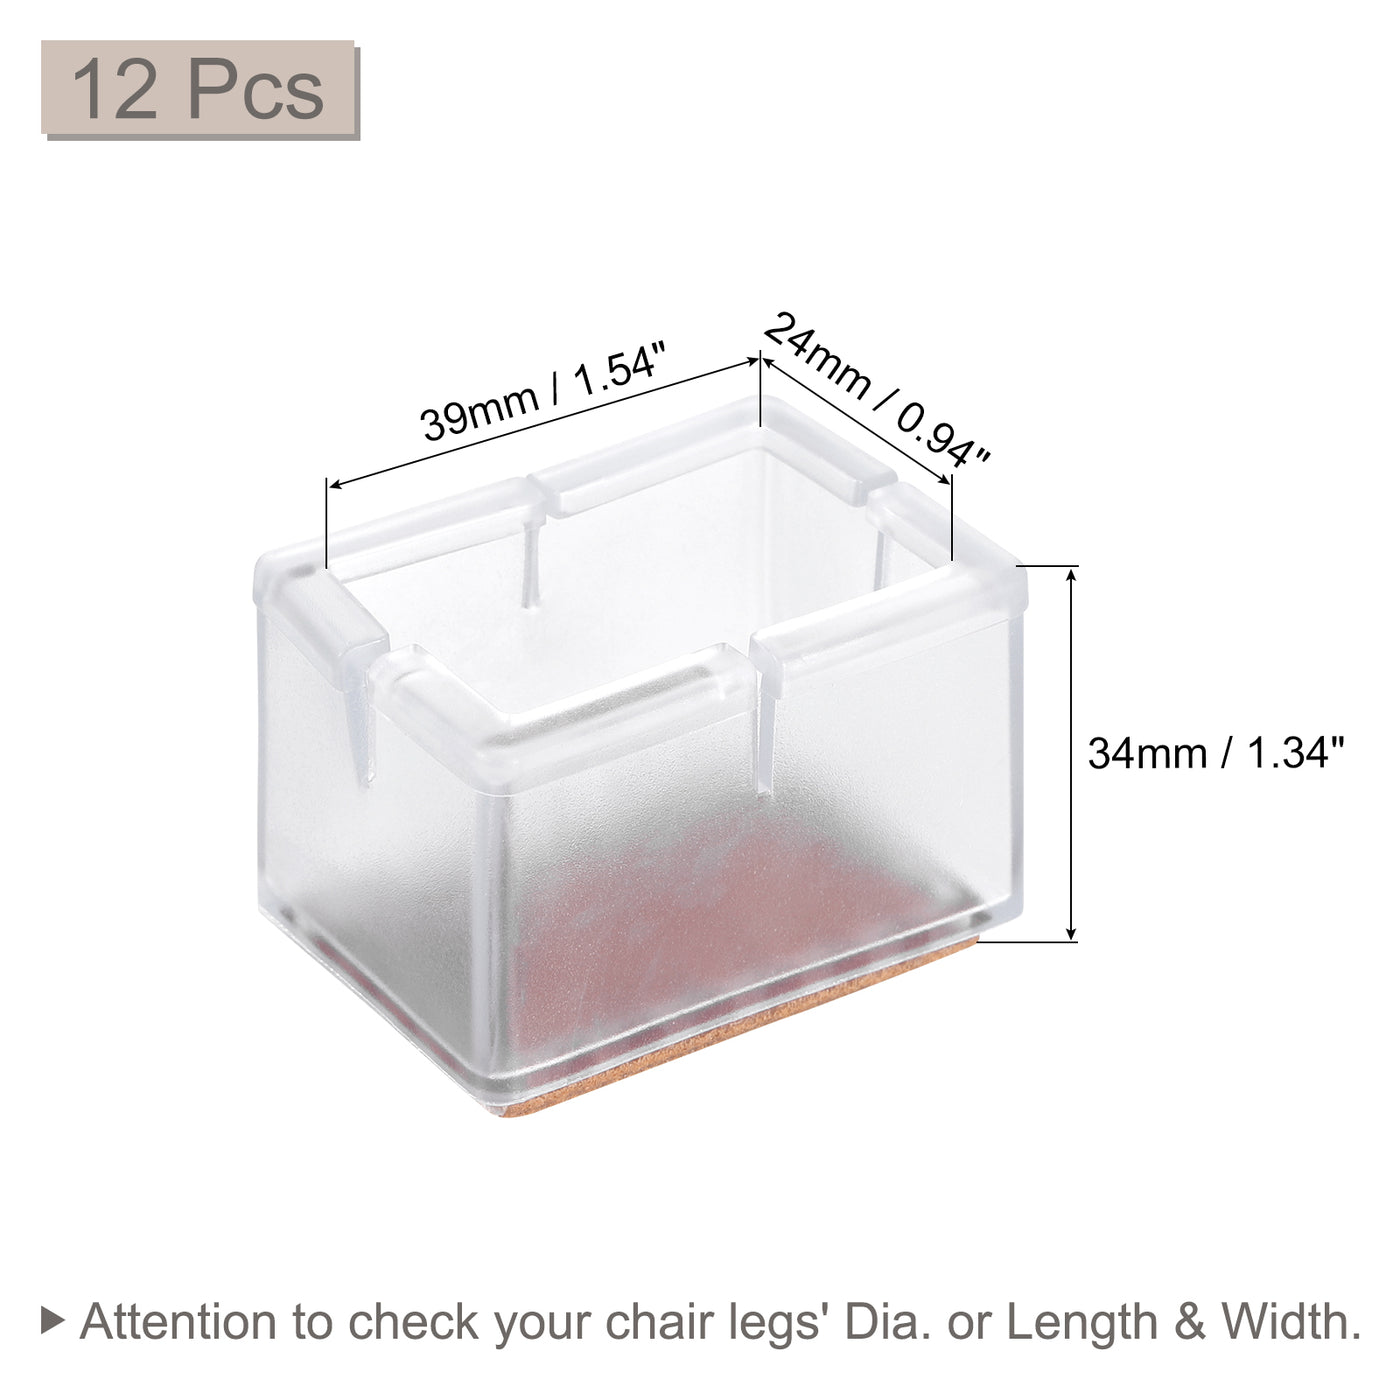 uxcell Uxcell Chair Leg Floor Protectors, 12Pcs 39mm(1.54") Rectangle PVC & Felt Chair Leg Cover Caps for Hardwood Floors (Clear White)